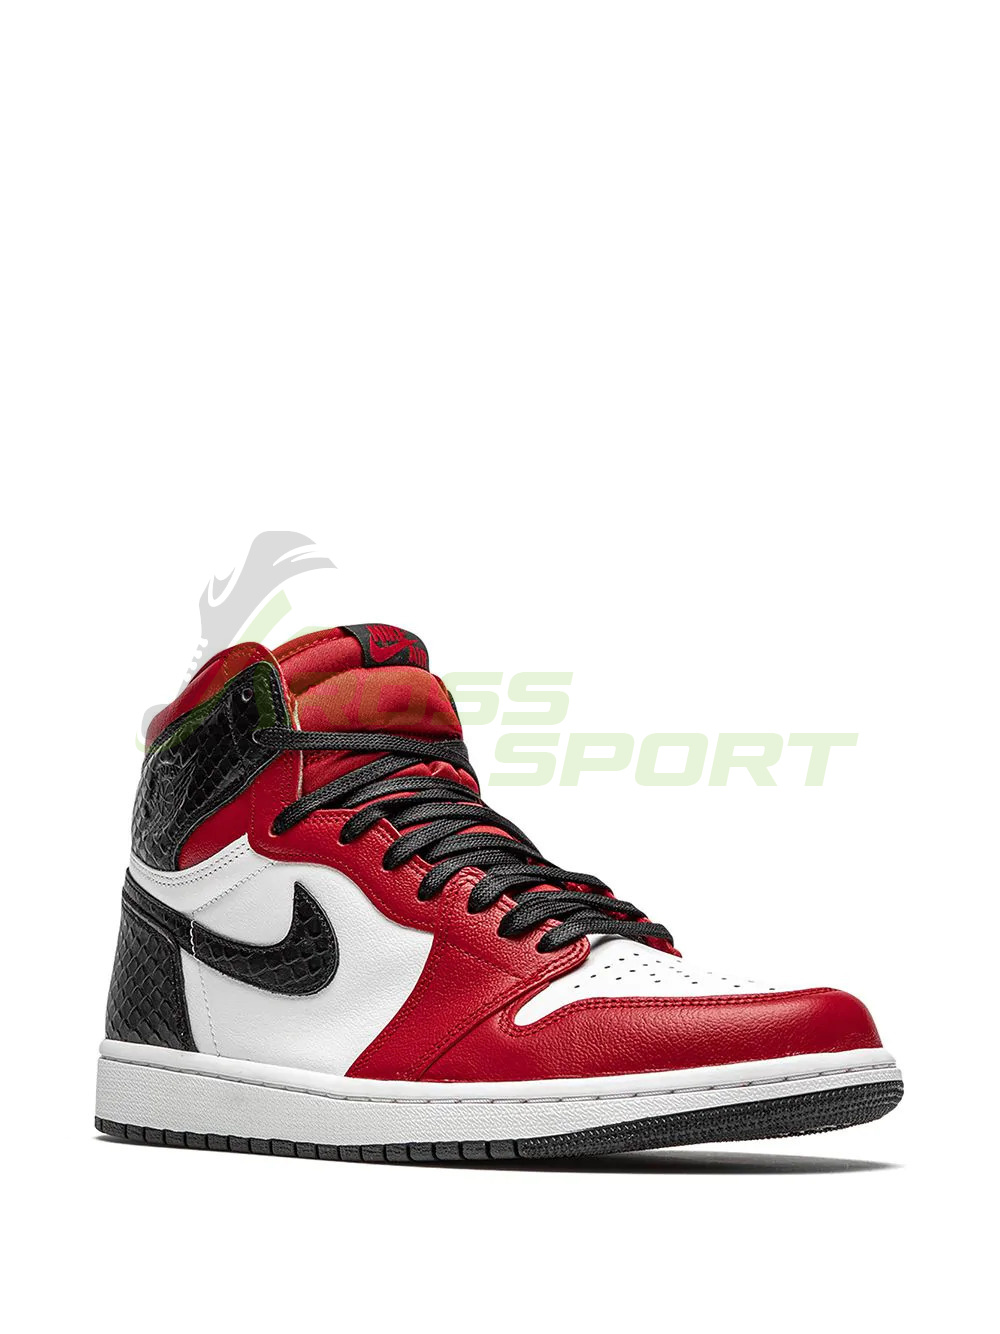  Nike Air Jordan 1 Retro Black/White/Red